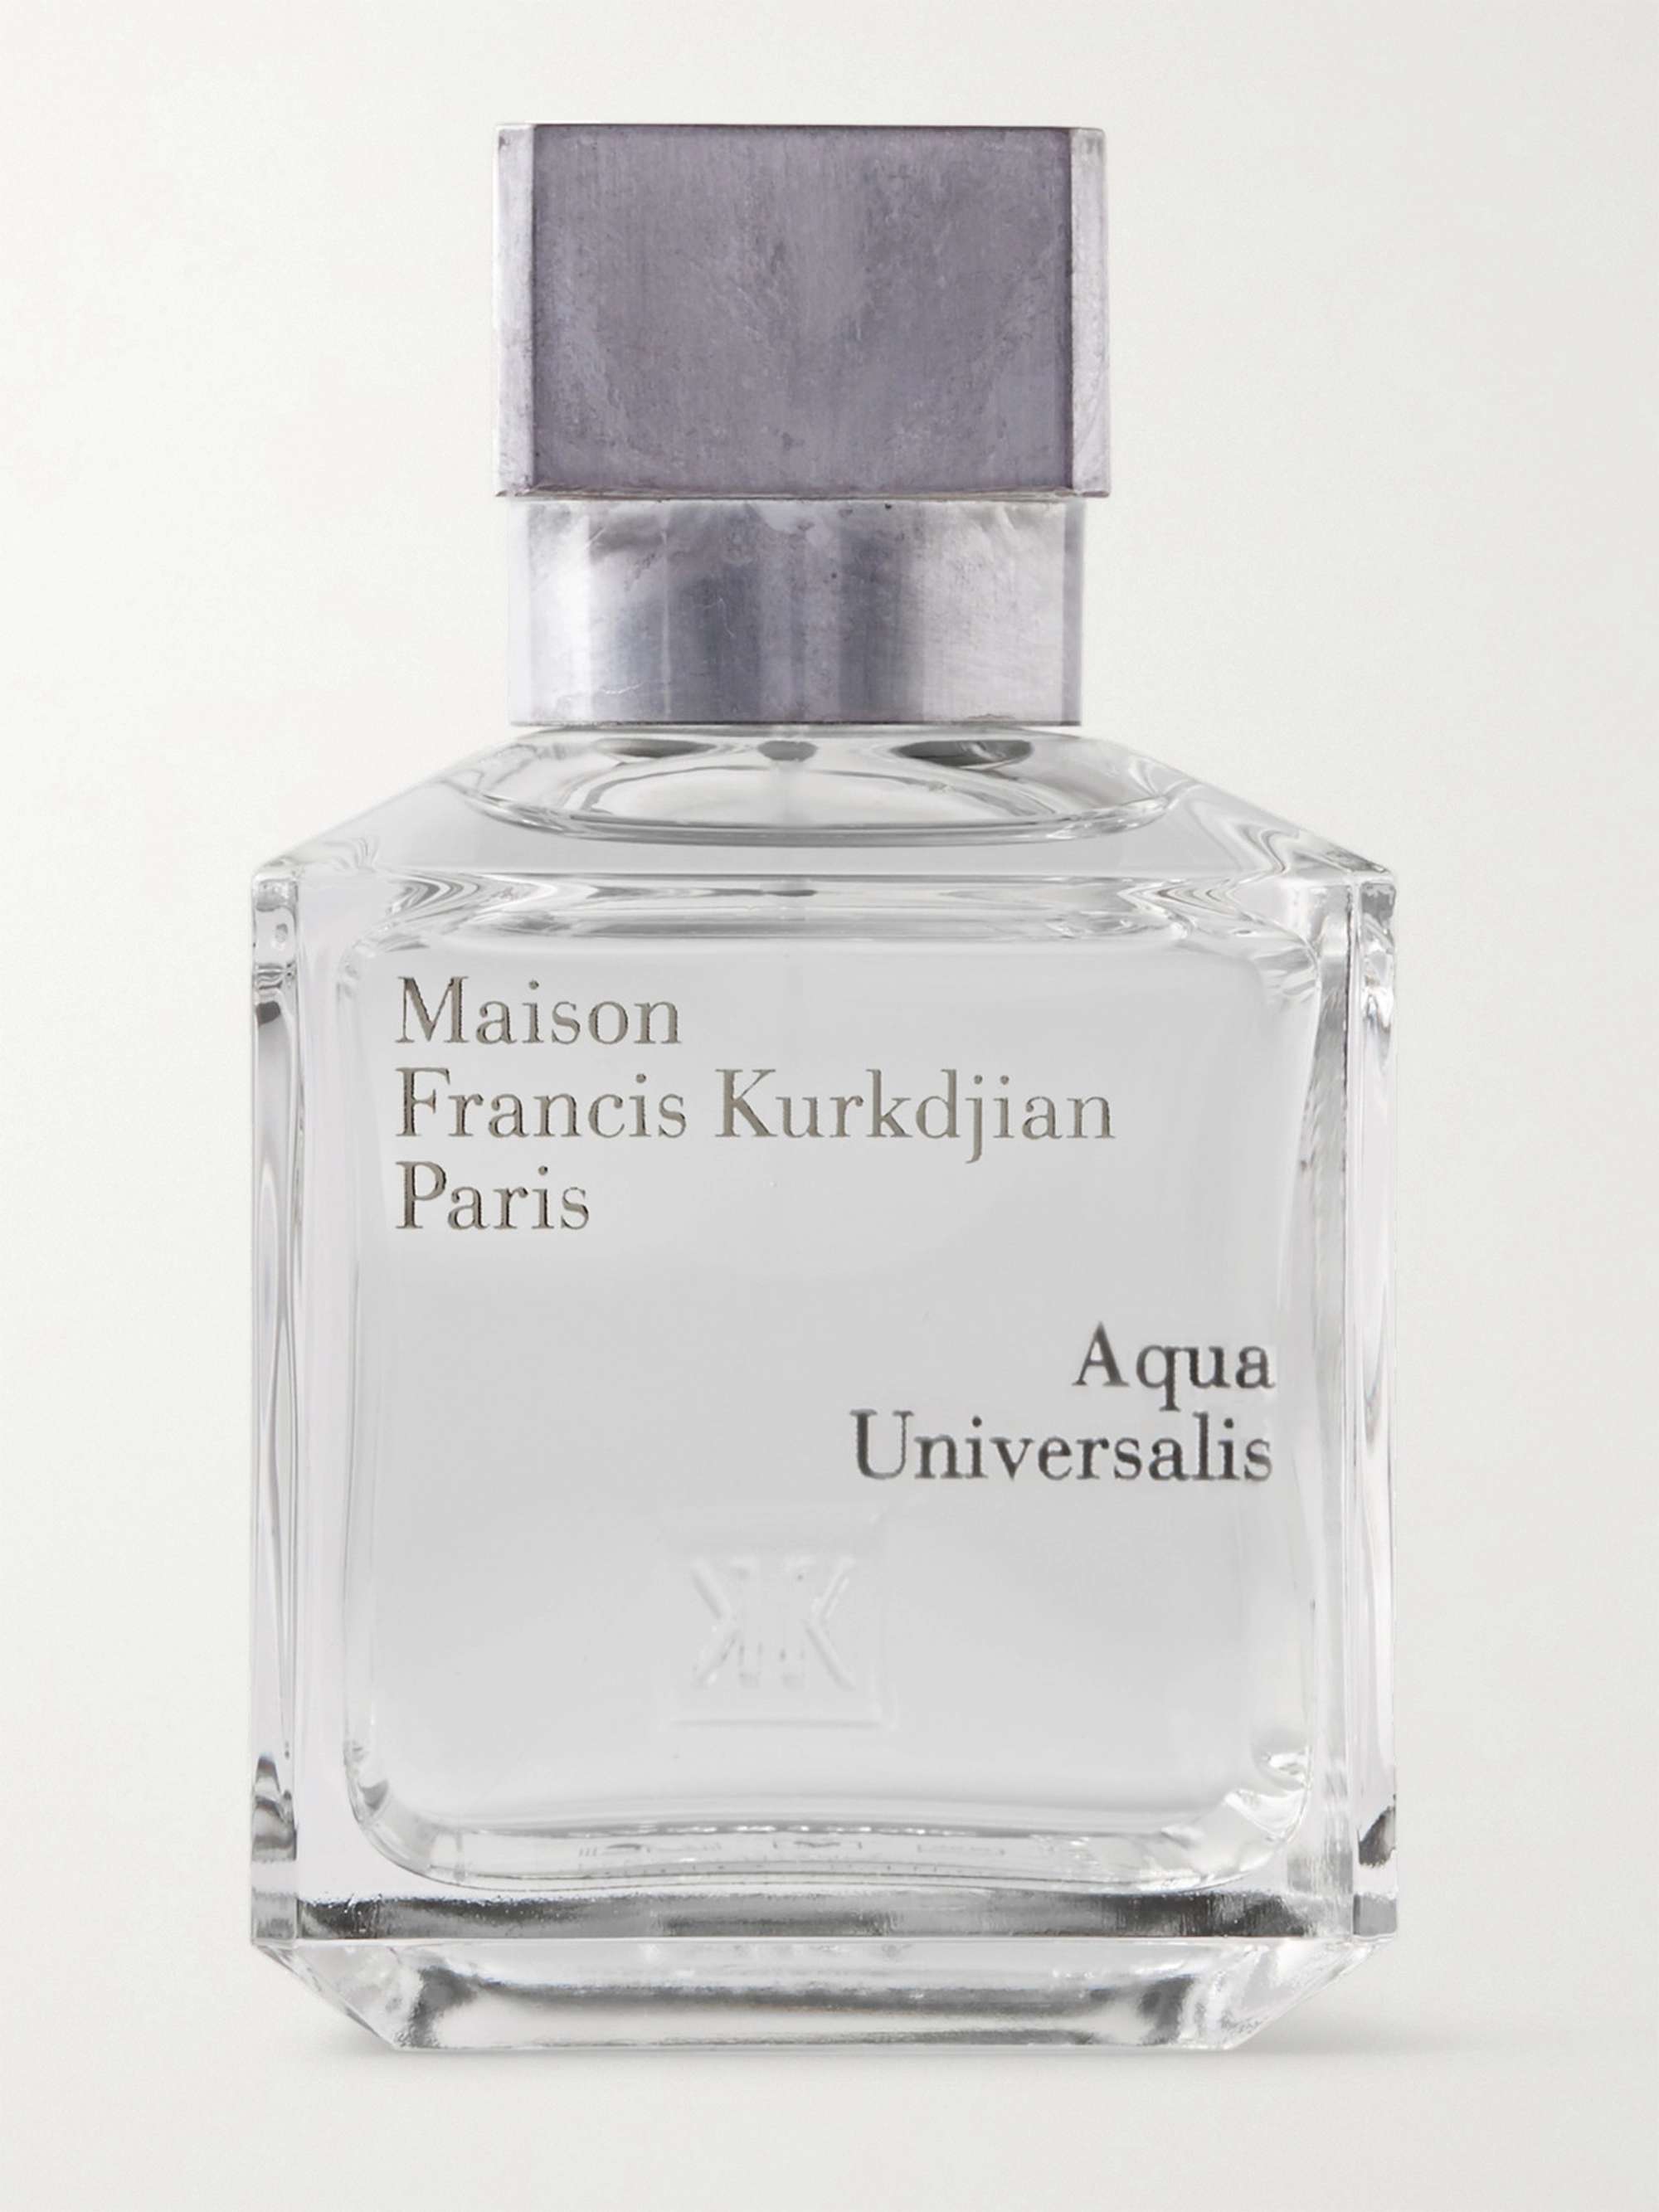 MAISON FRANCIS KURKDJIAN Aqua Universalis Eau de Toilette - Bergamot, White Flowers, 70ml